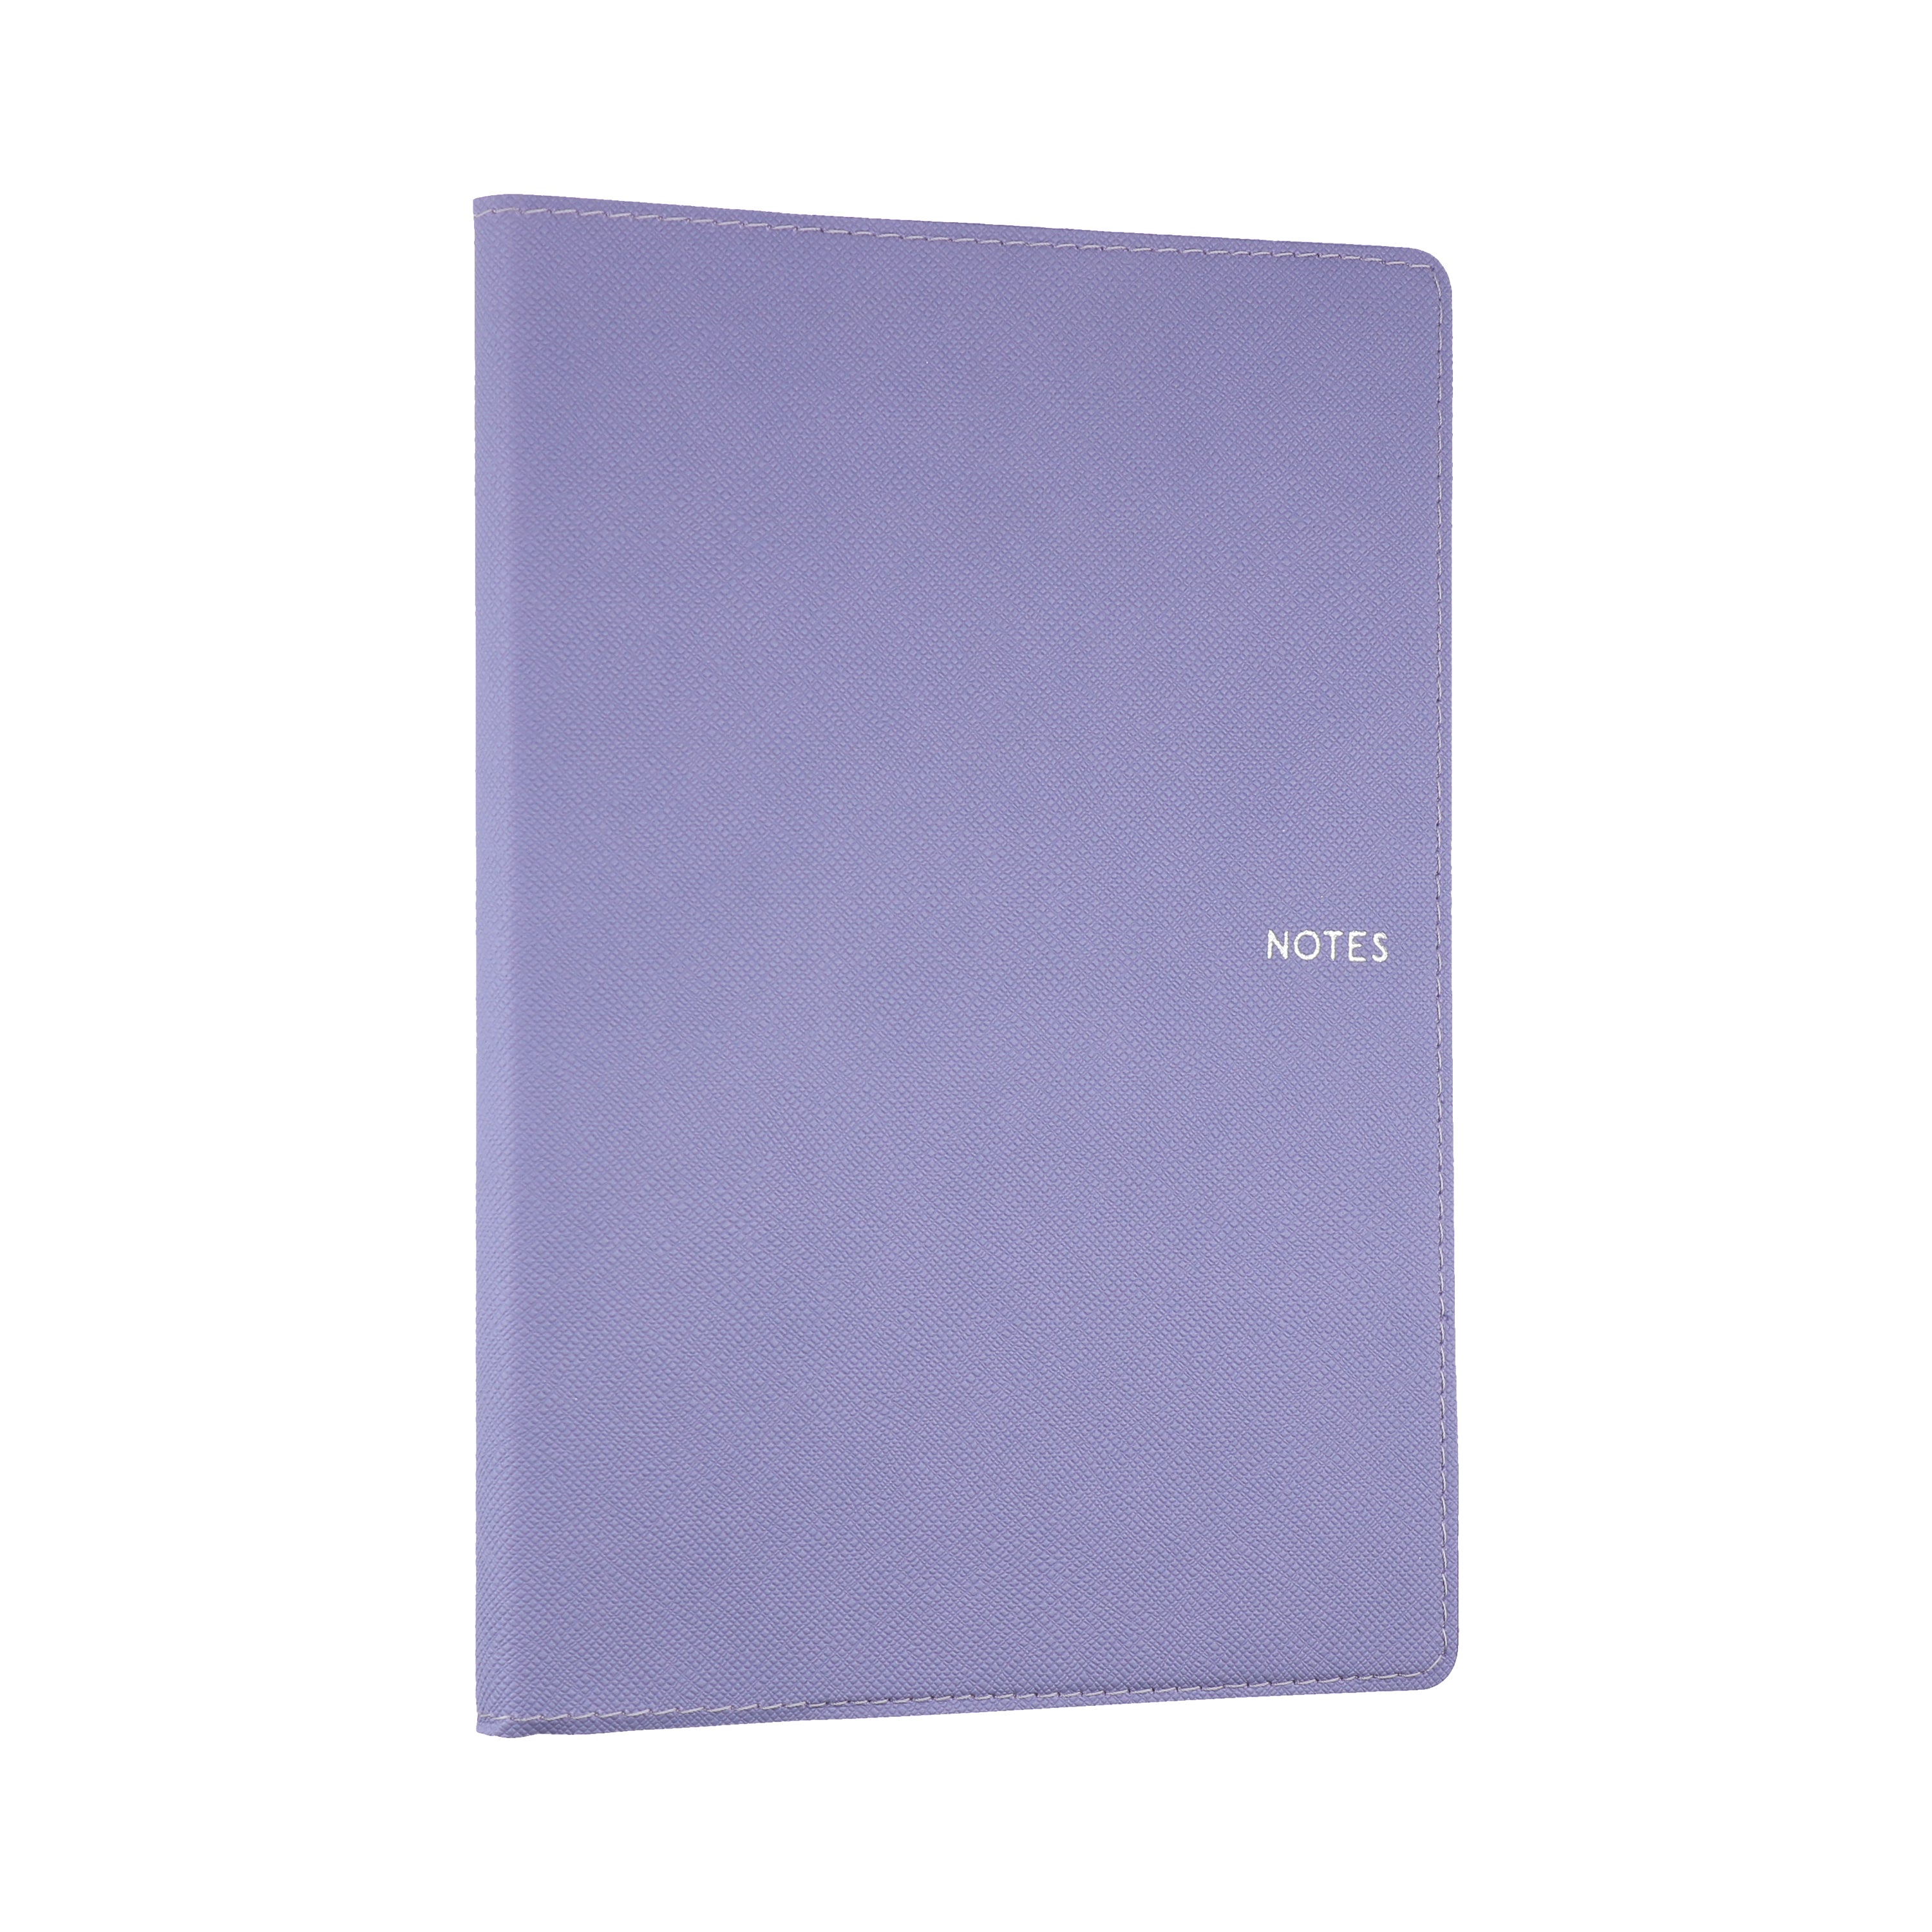 Metropolitan Melbourne Notebook - A5 - Ruled Purple